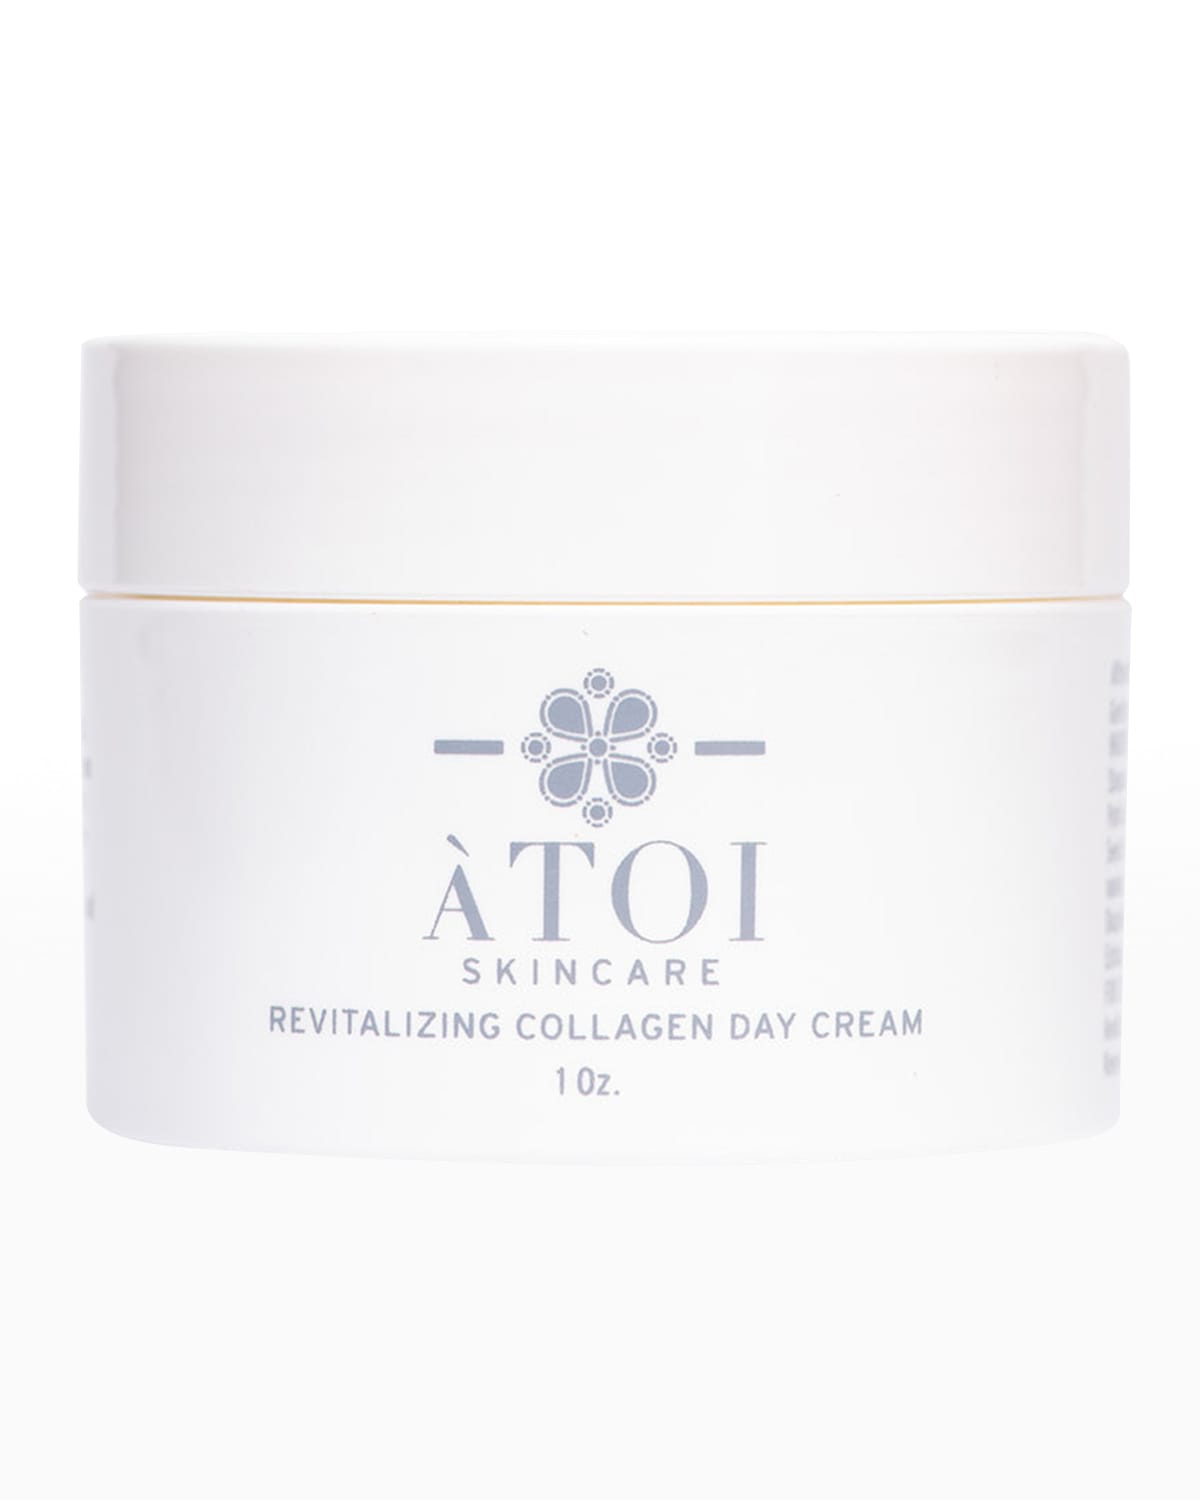 ATOI Skincare Revitalizing Collagen Day Cream, 1 oz.